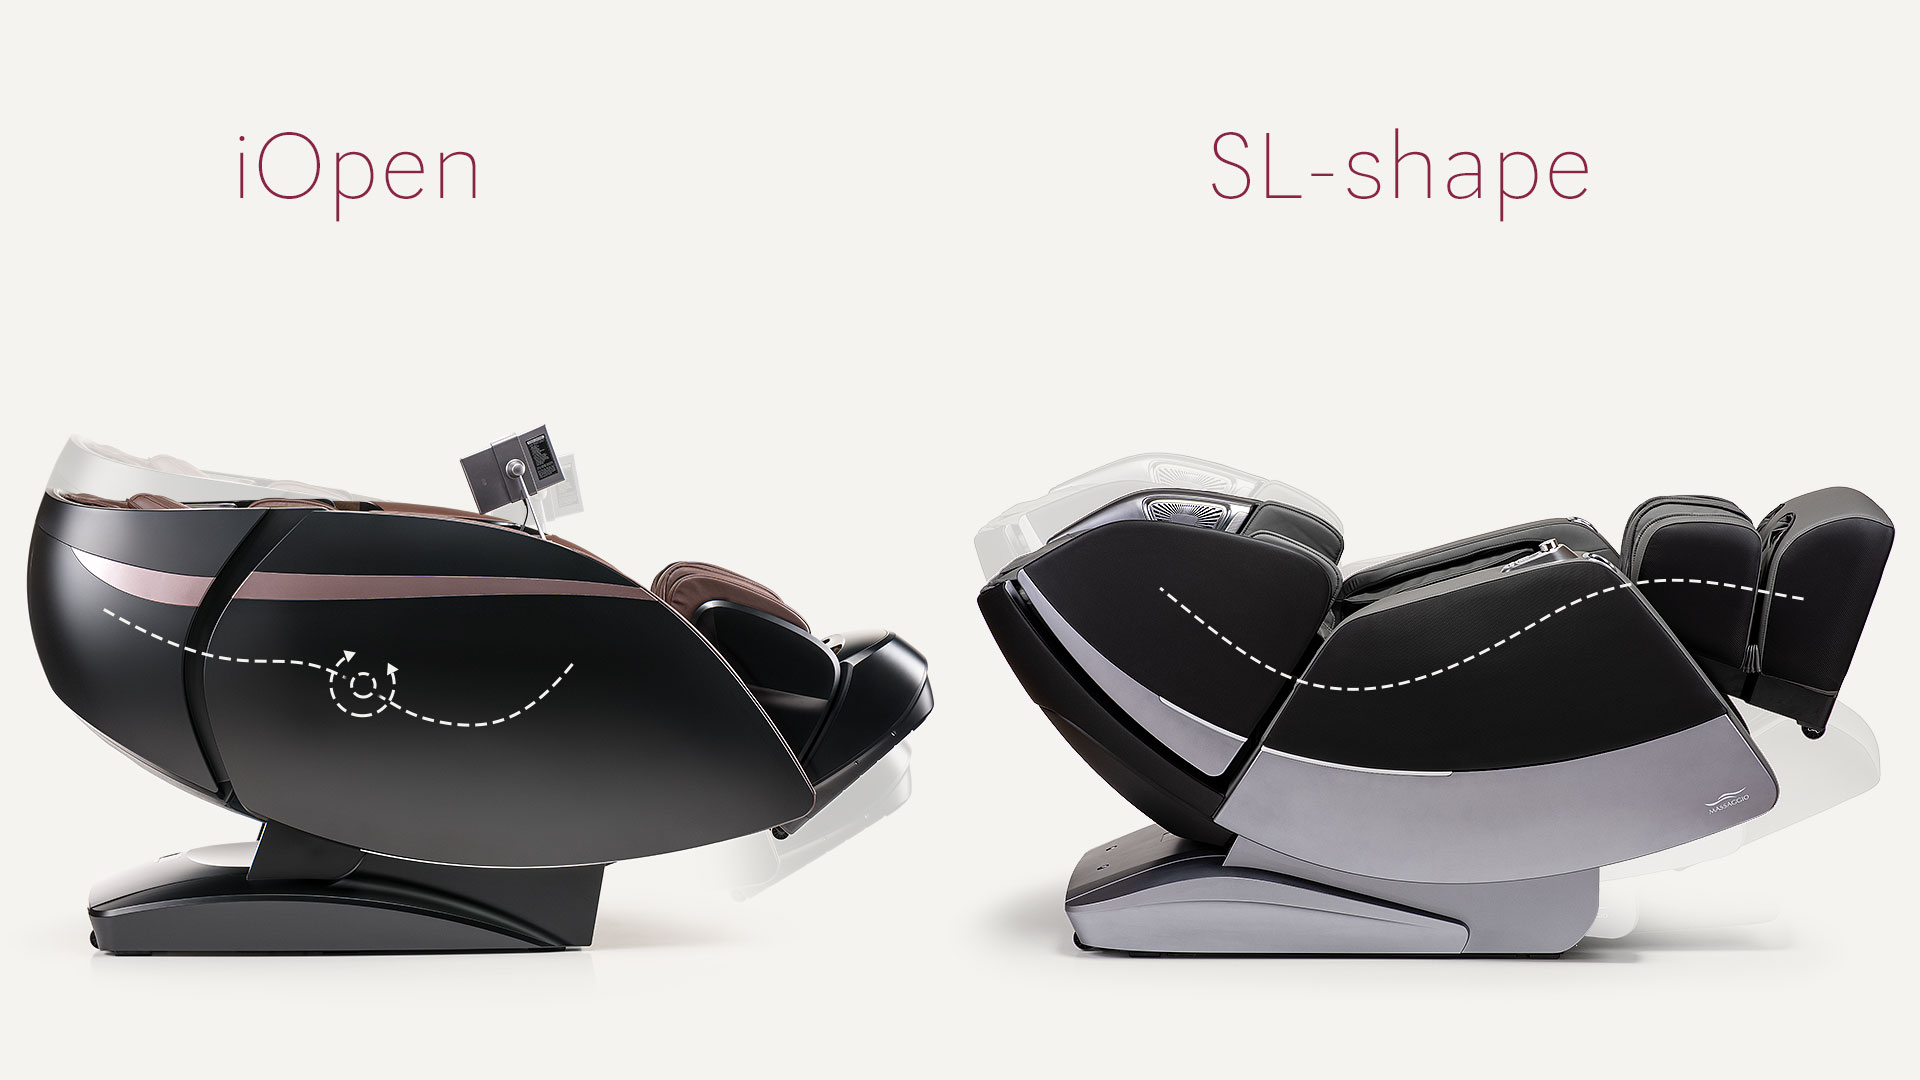 SL-shape in a massage chair